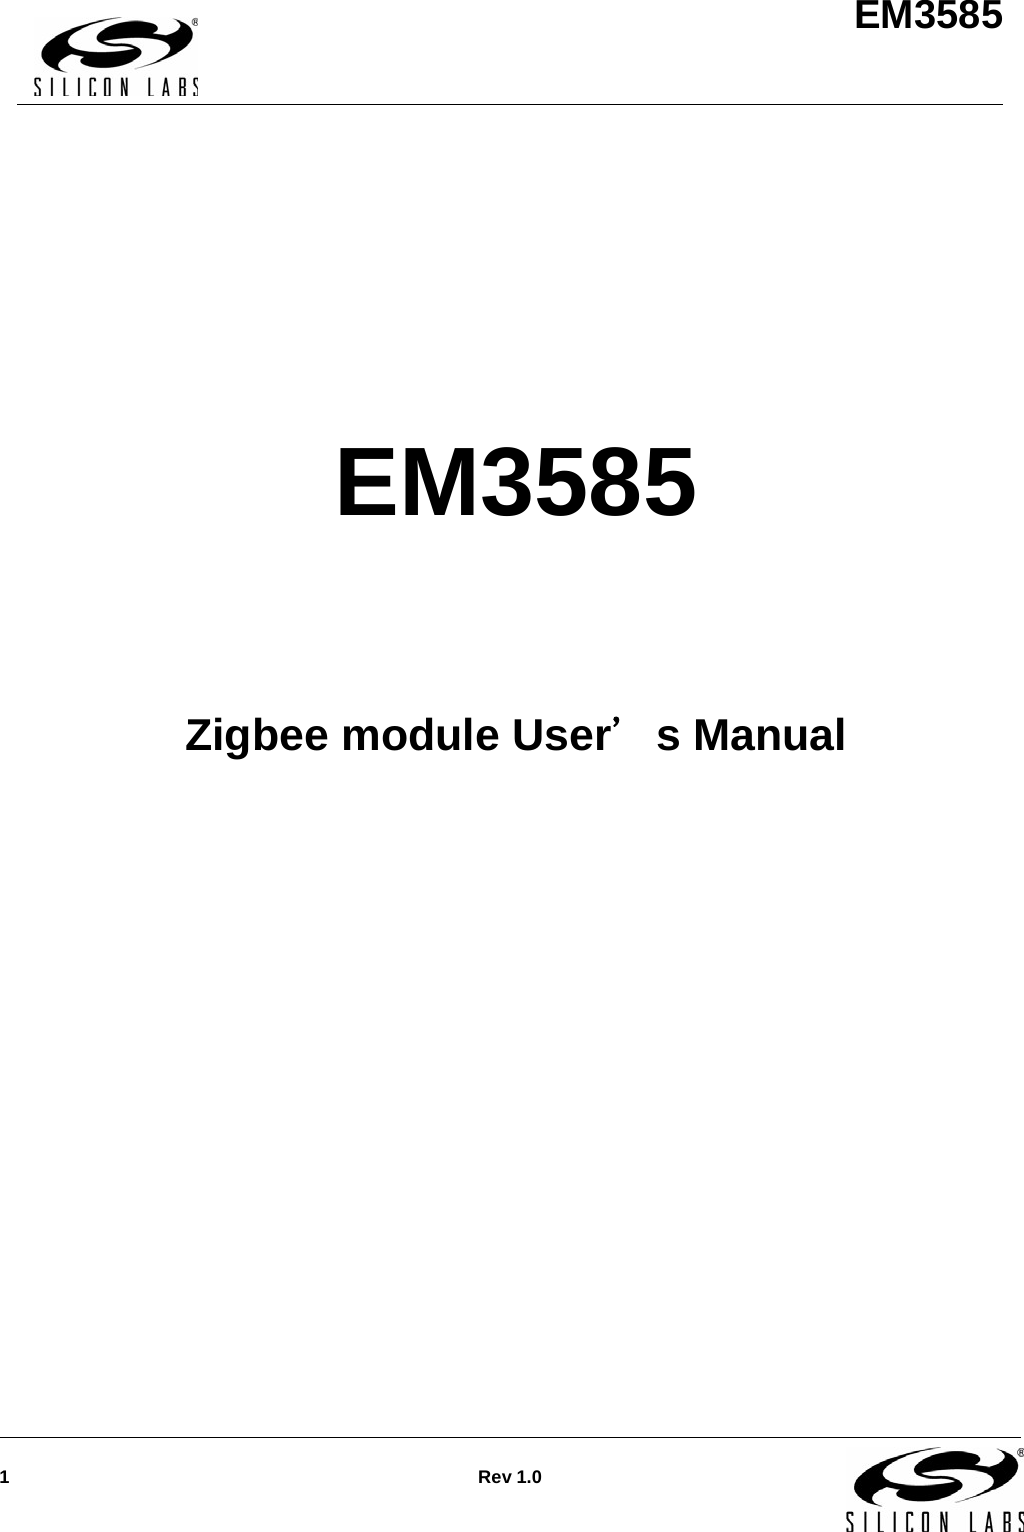 1 Rev 1.0EM3585             EM3585    Zigbee module User’s Manual                     